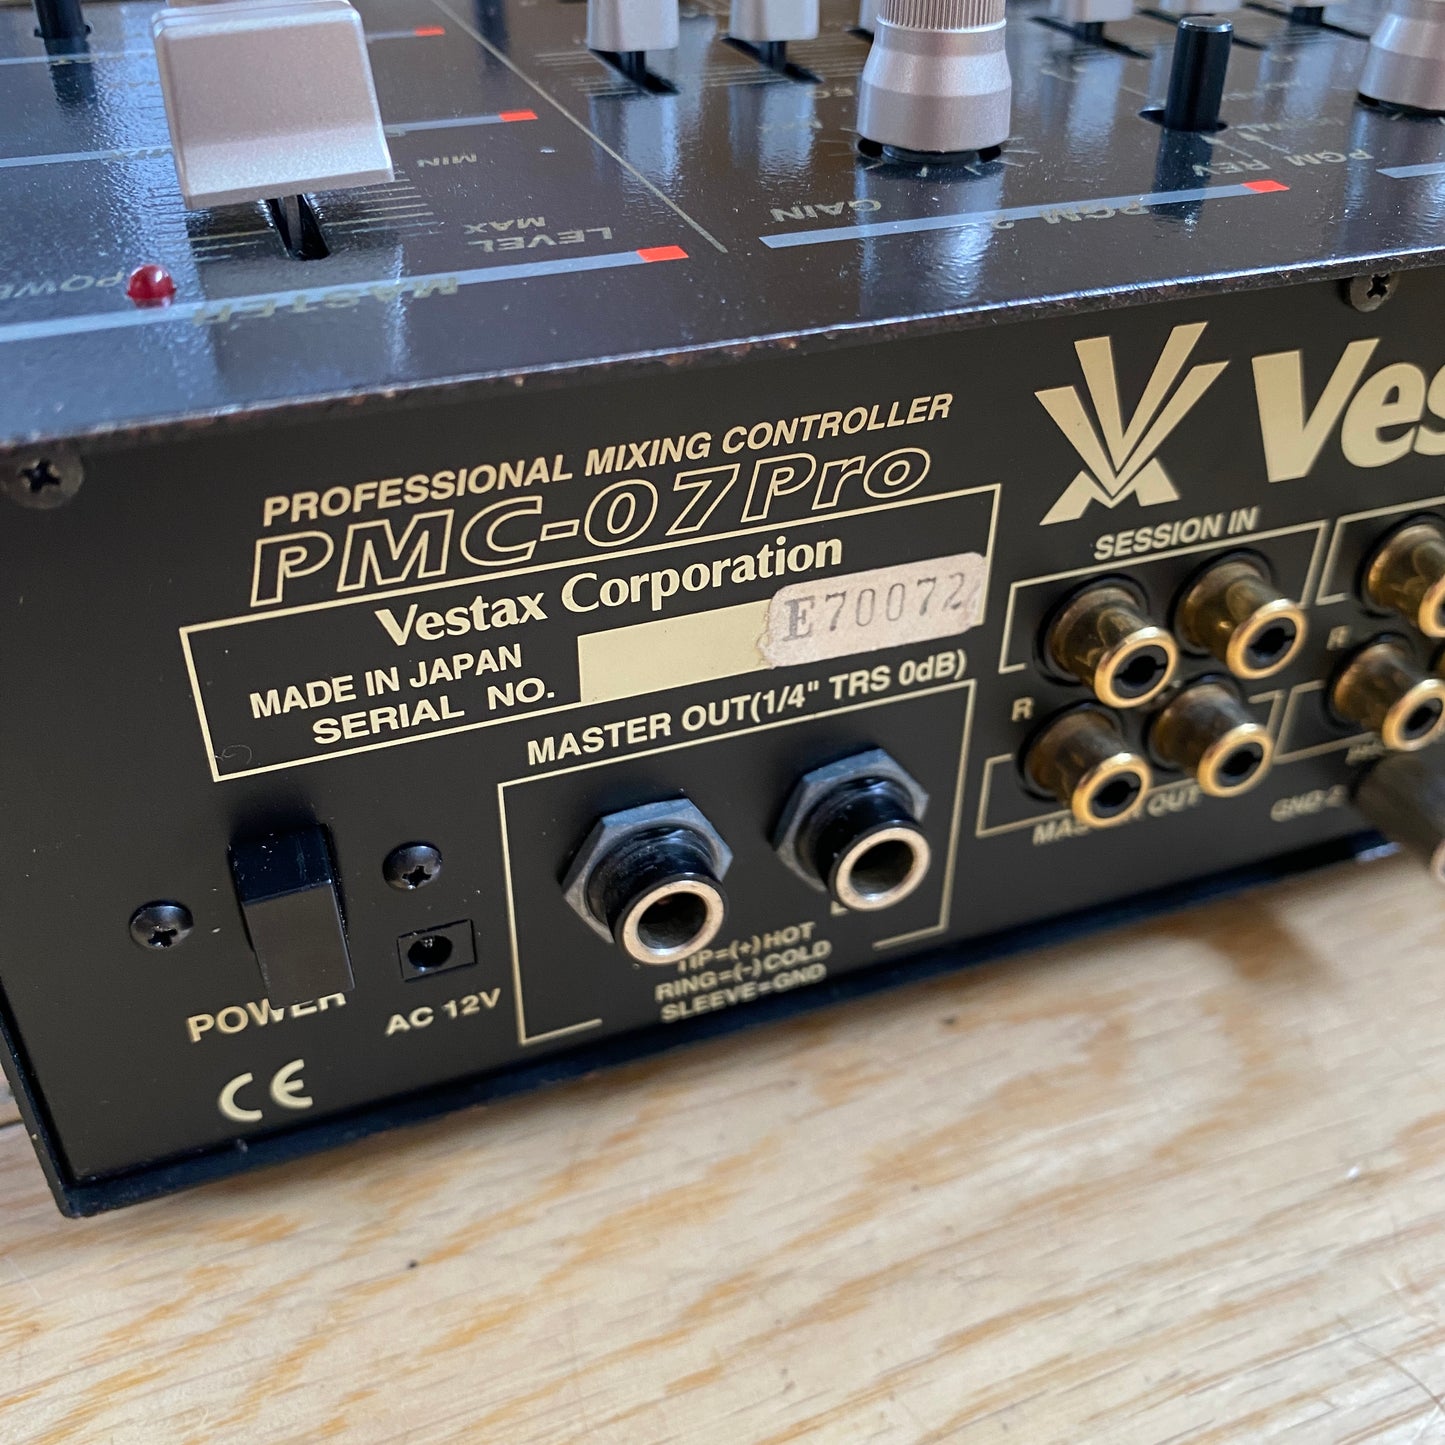 Vestax PMC-07 Pro Mixer Remix Serviced Mixer